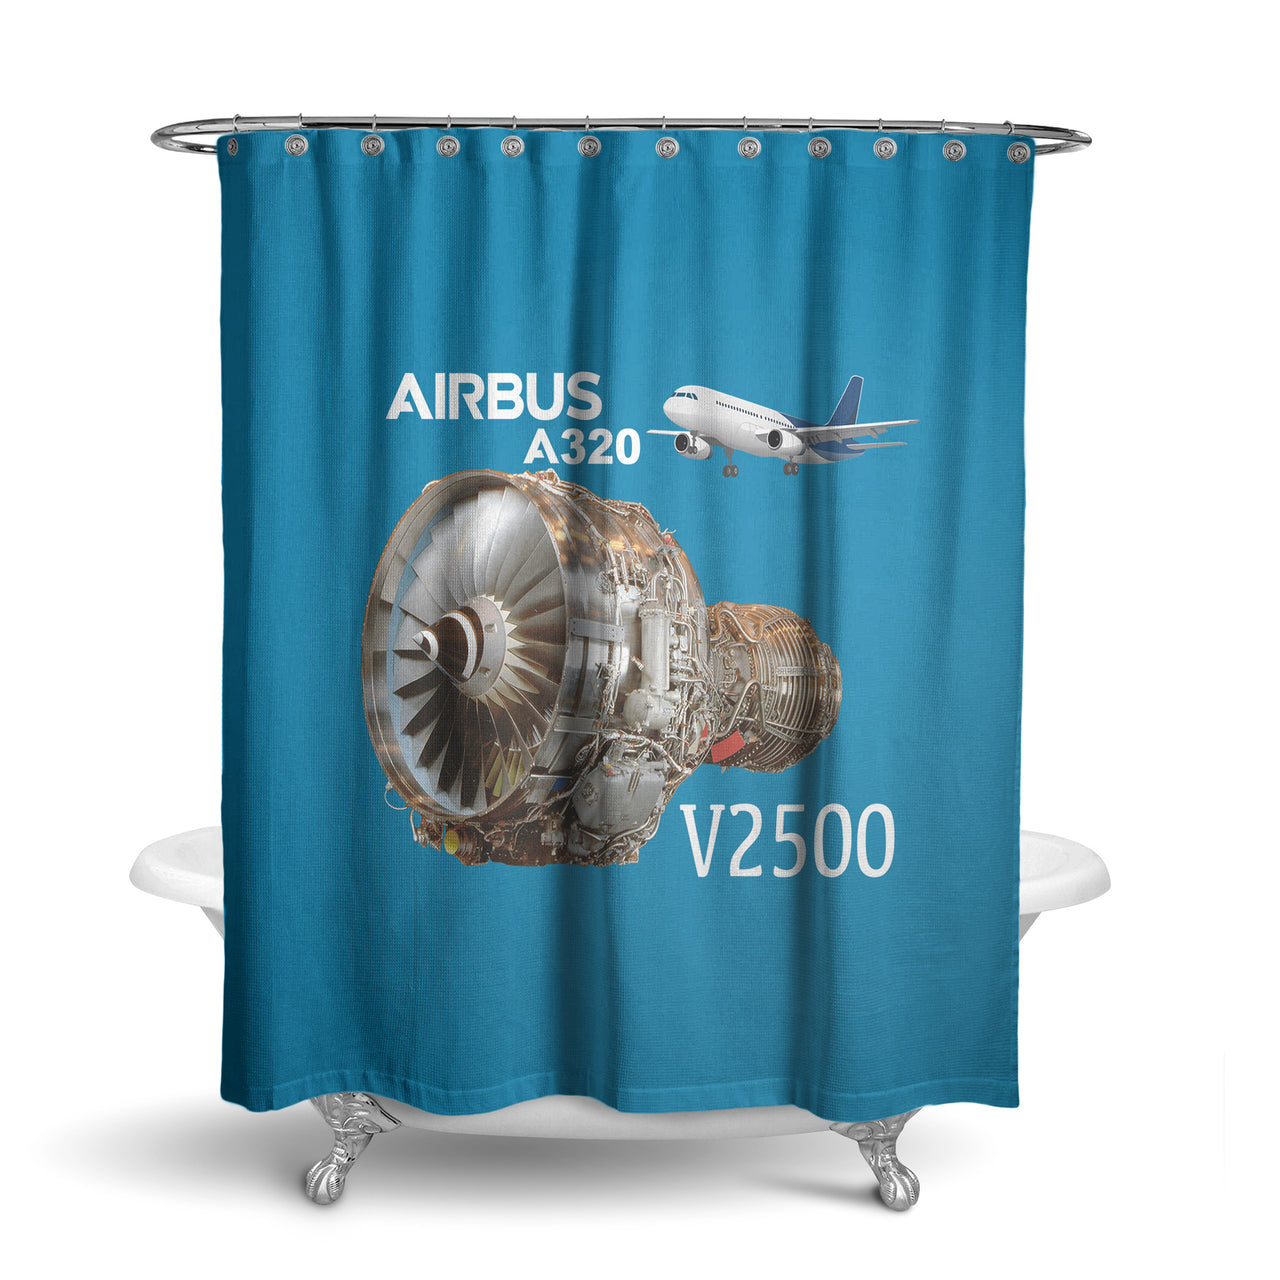 Airbus A320 & V2500 Engine Designed Shower Curtains